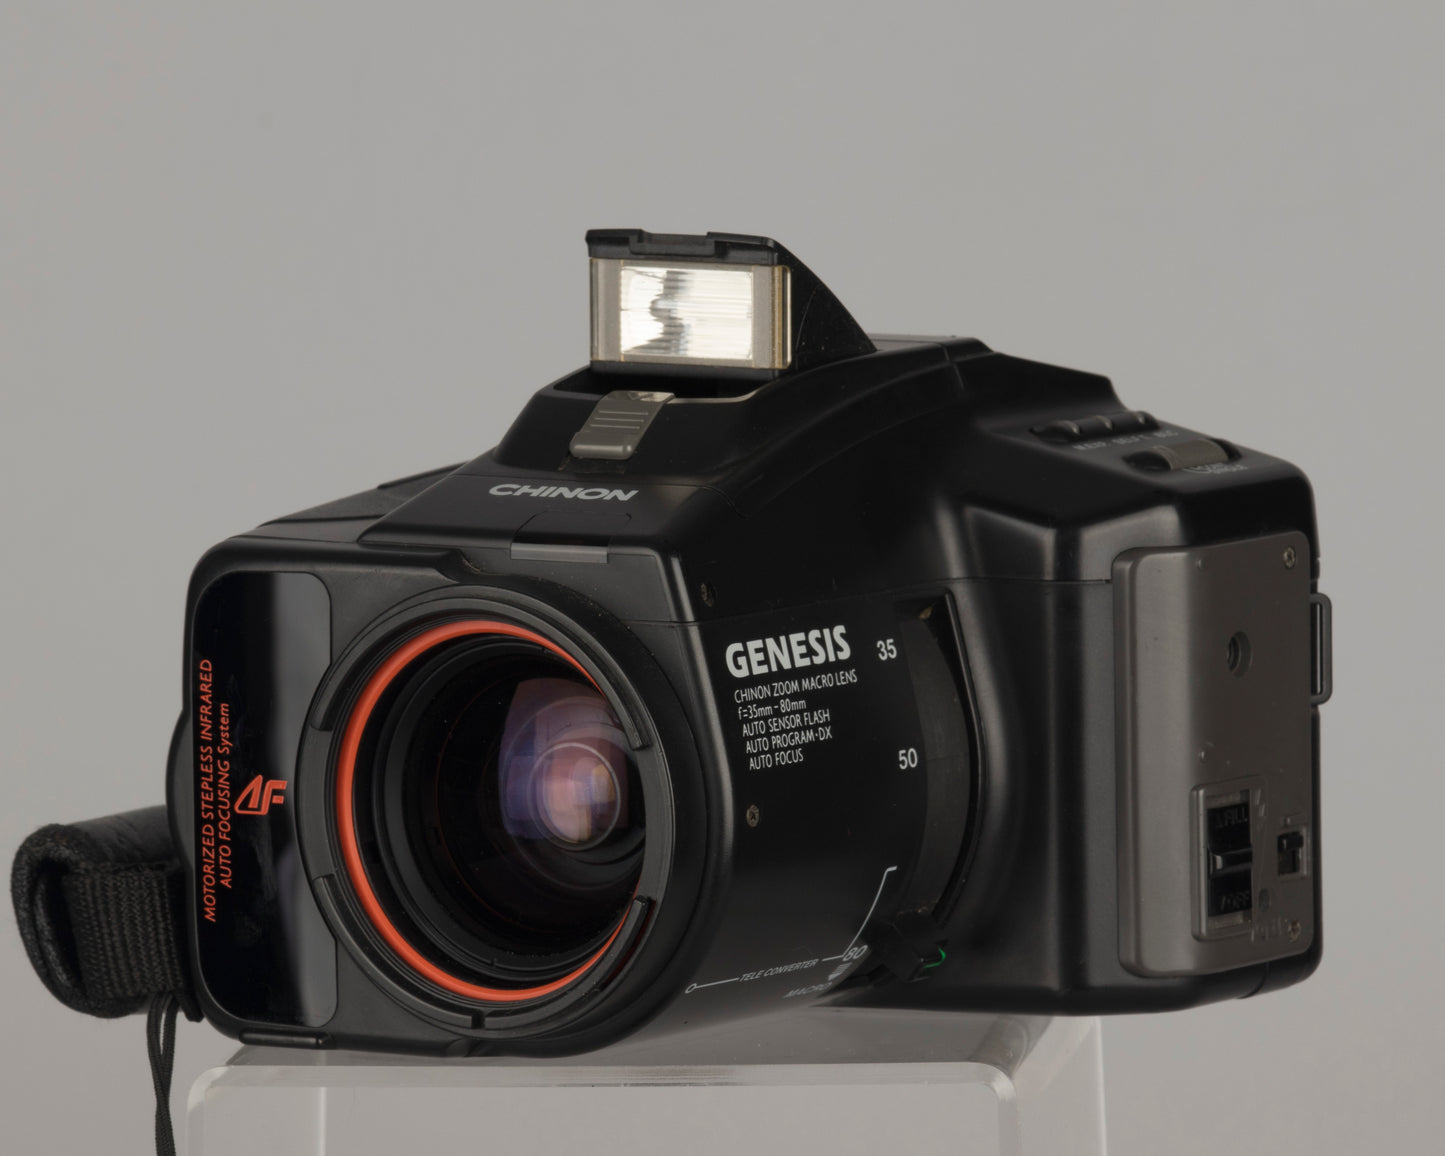 Reflex à film 35 mm Chinon Genesis 'bridge' avec objectif 35-80 mm